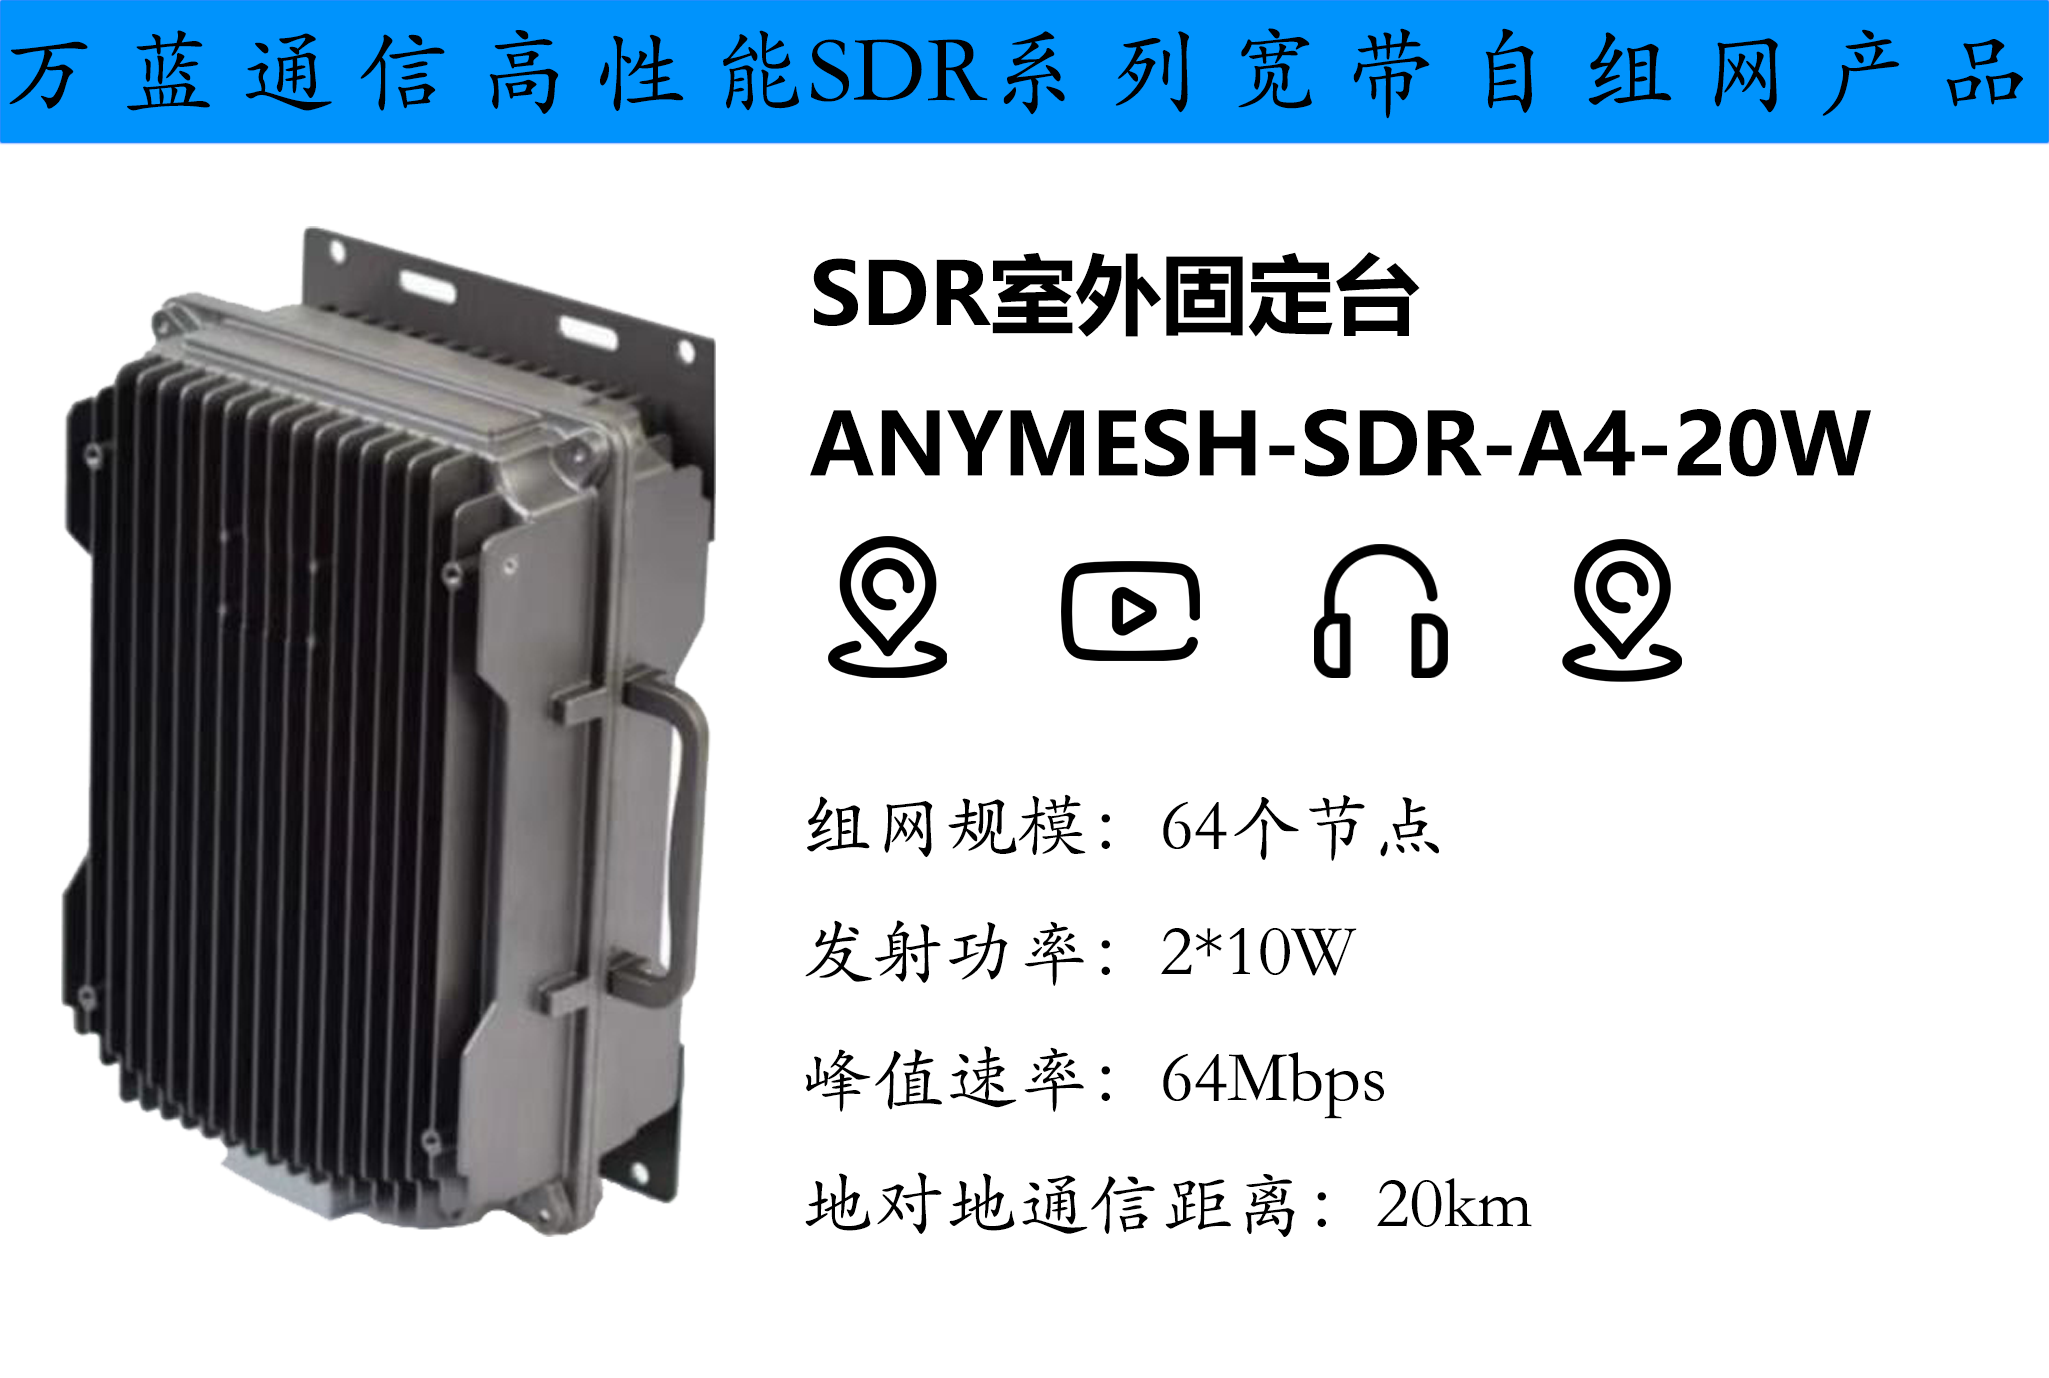 ANYMESH-SDR-A4-20W室外基站型自组网设备 自组网固定